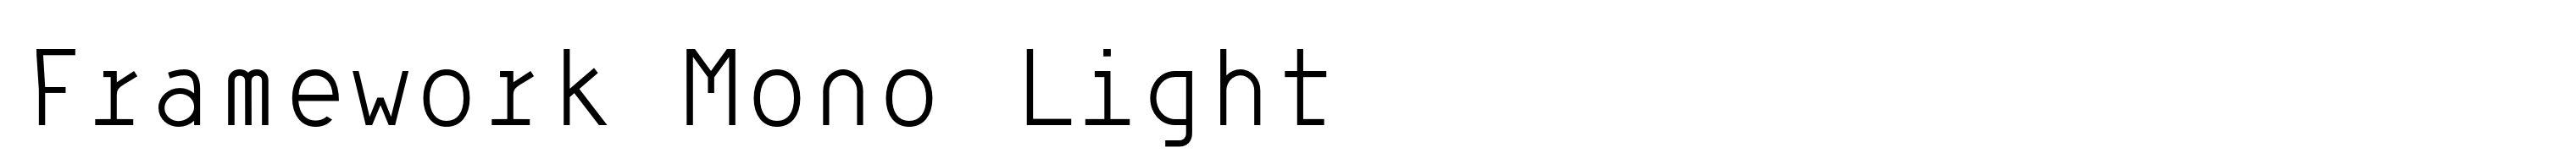 Framework Mono Light